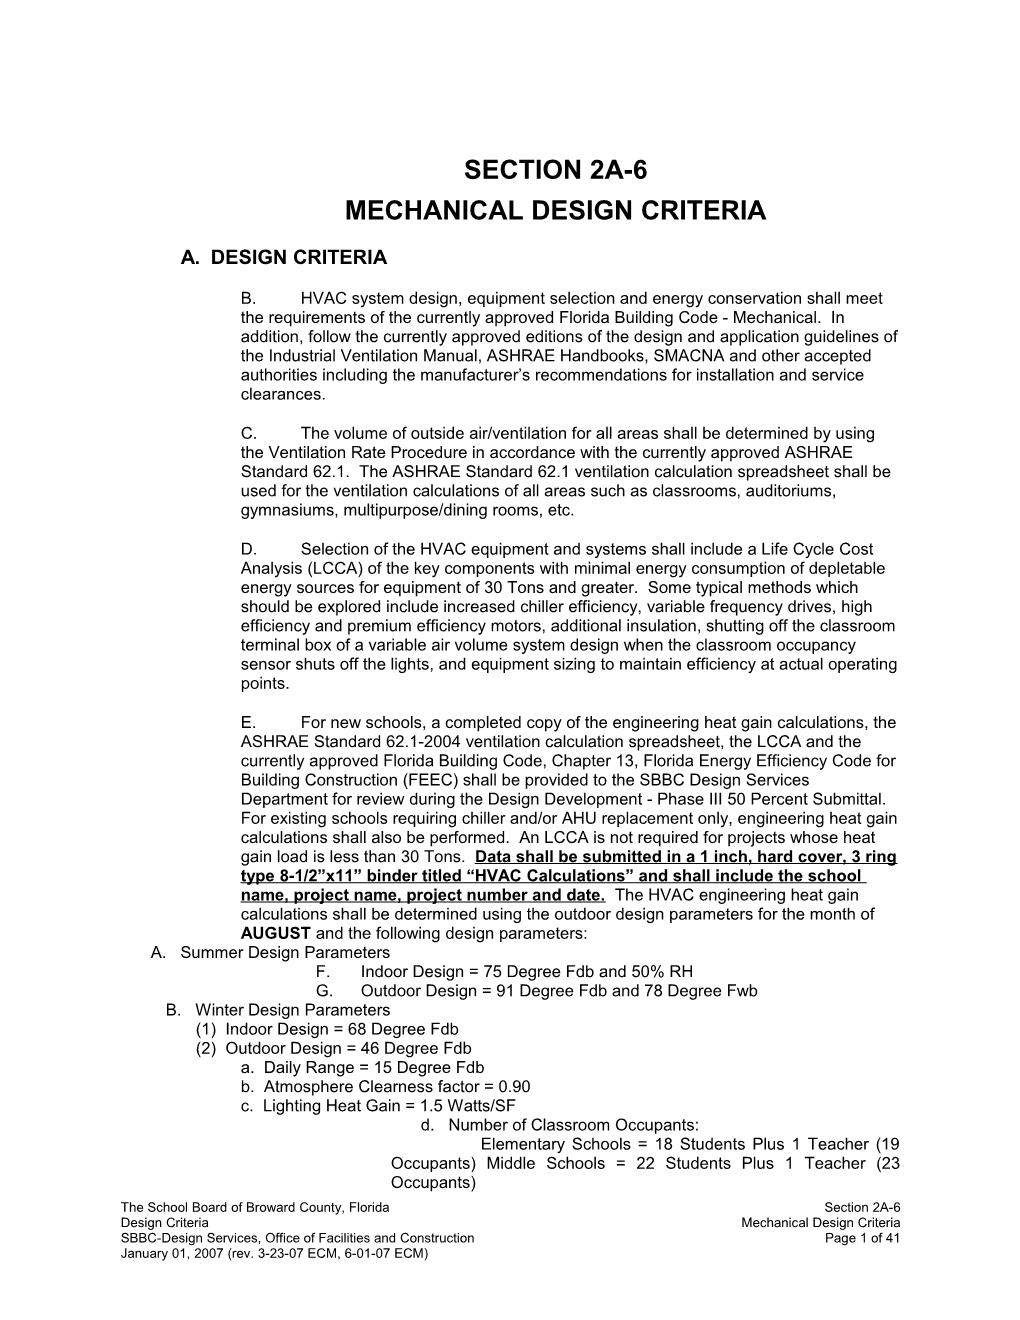 Mechanical Design Criteria